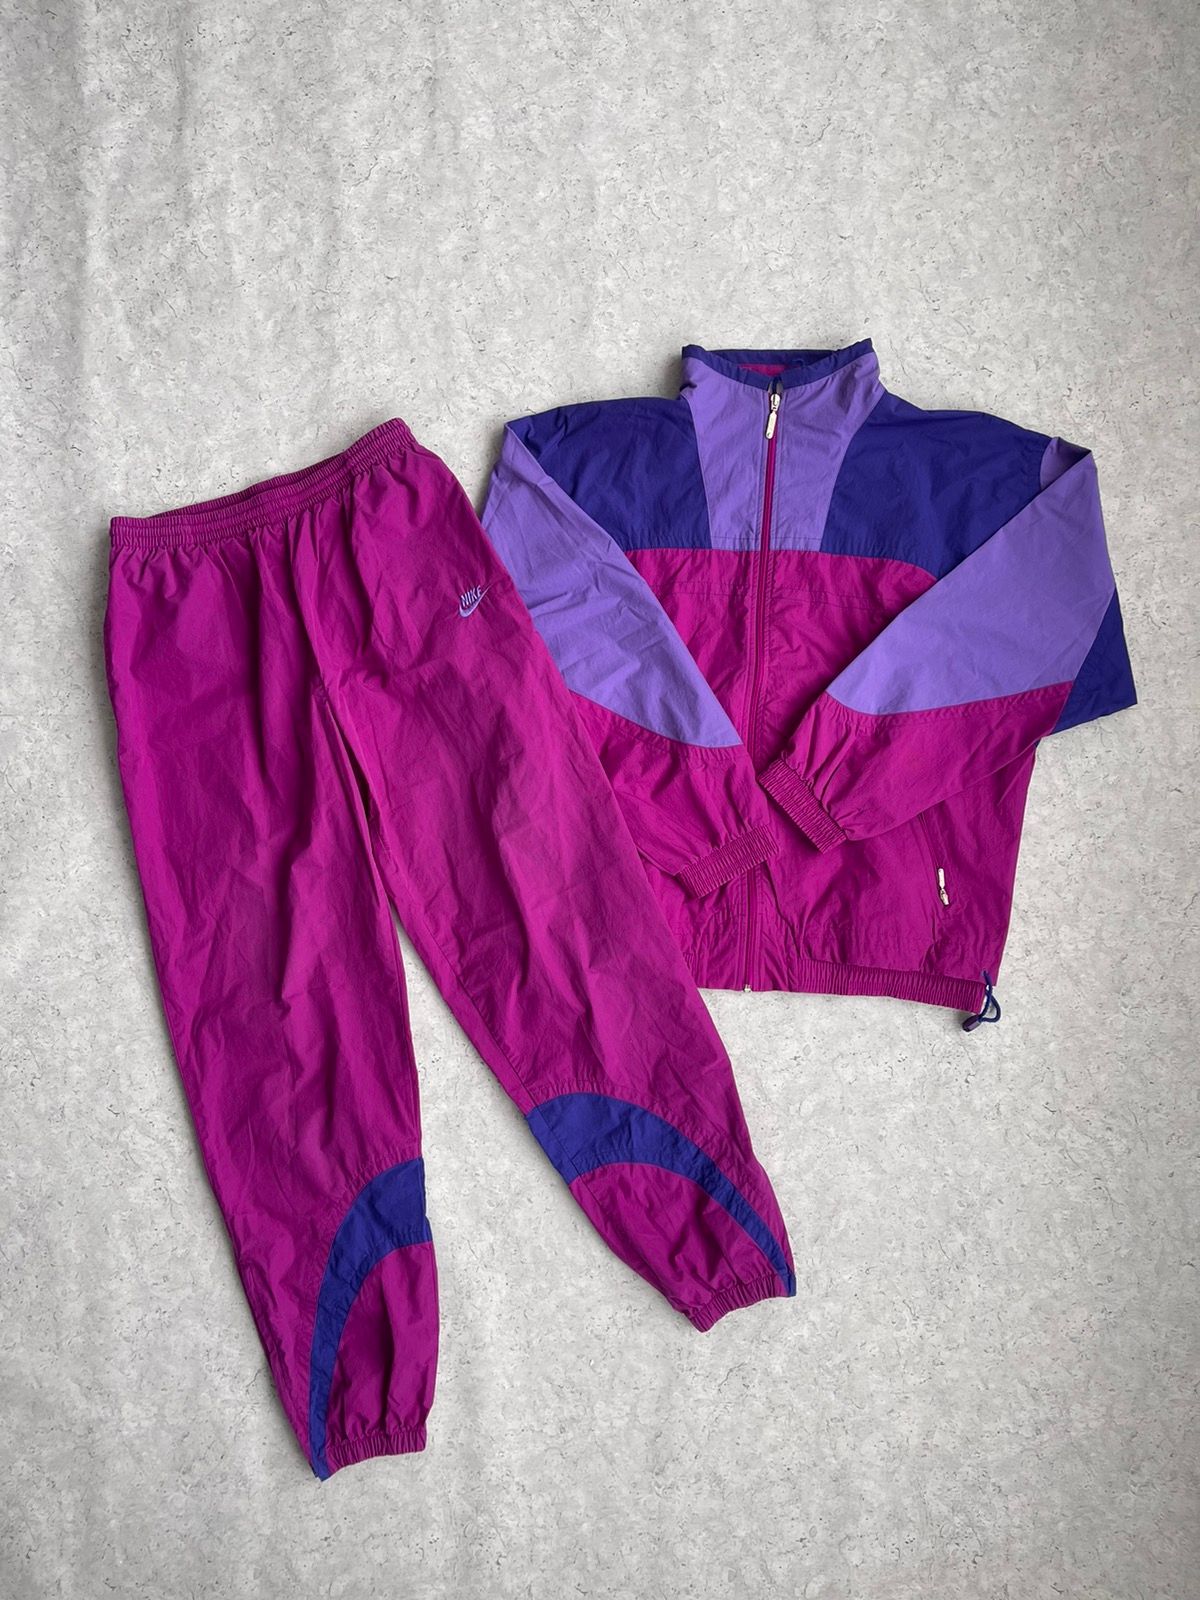 Pre-owned Nike X Vintage Nike Vintage Tracking Suit Jacket Sweatpants Purple 1990s